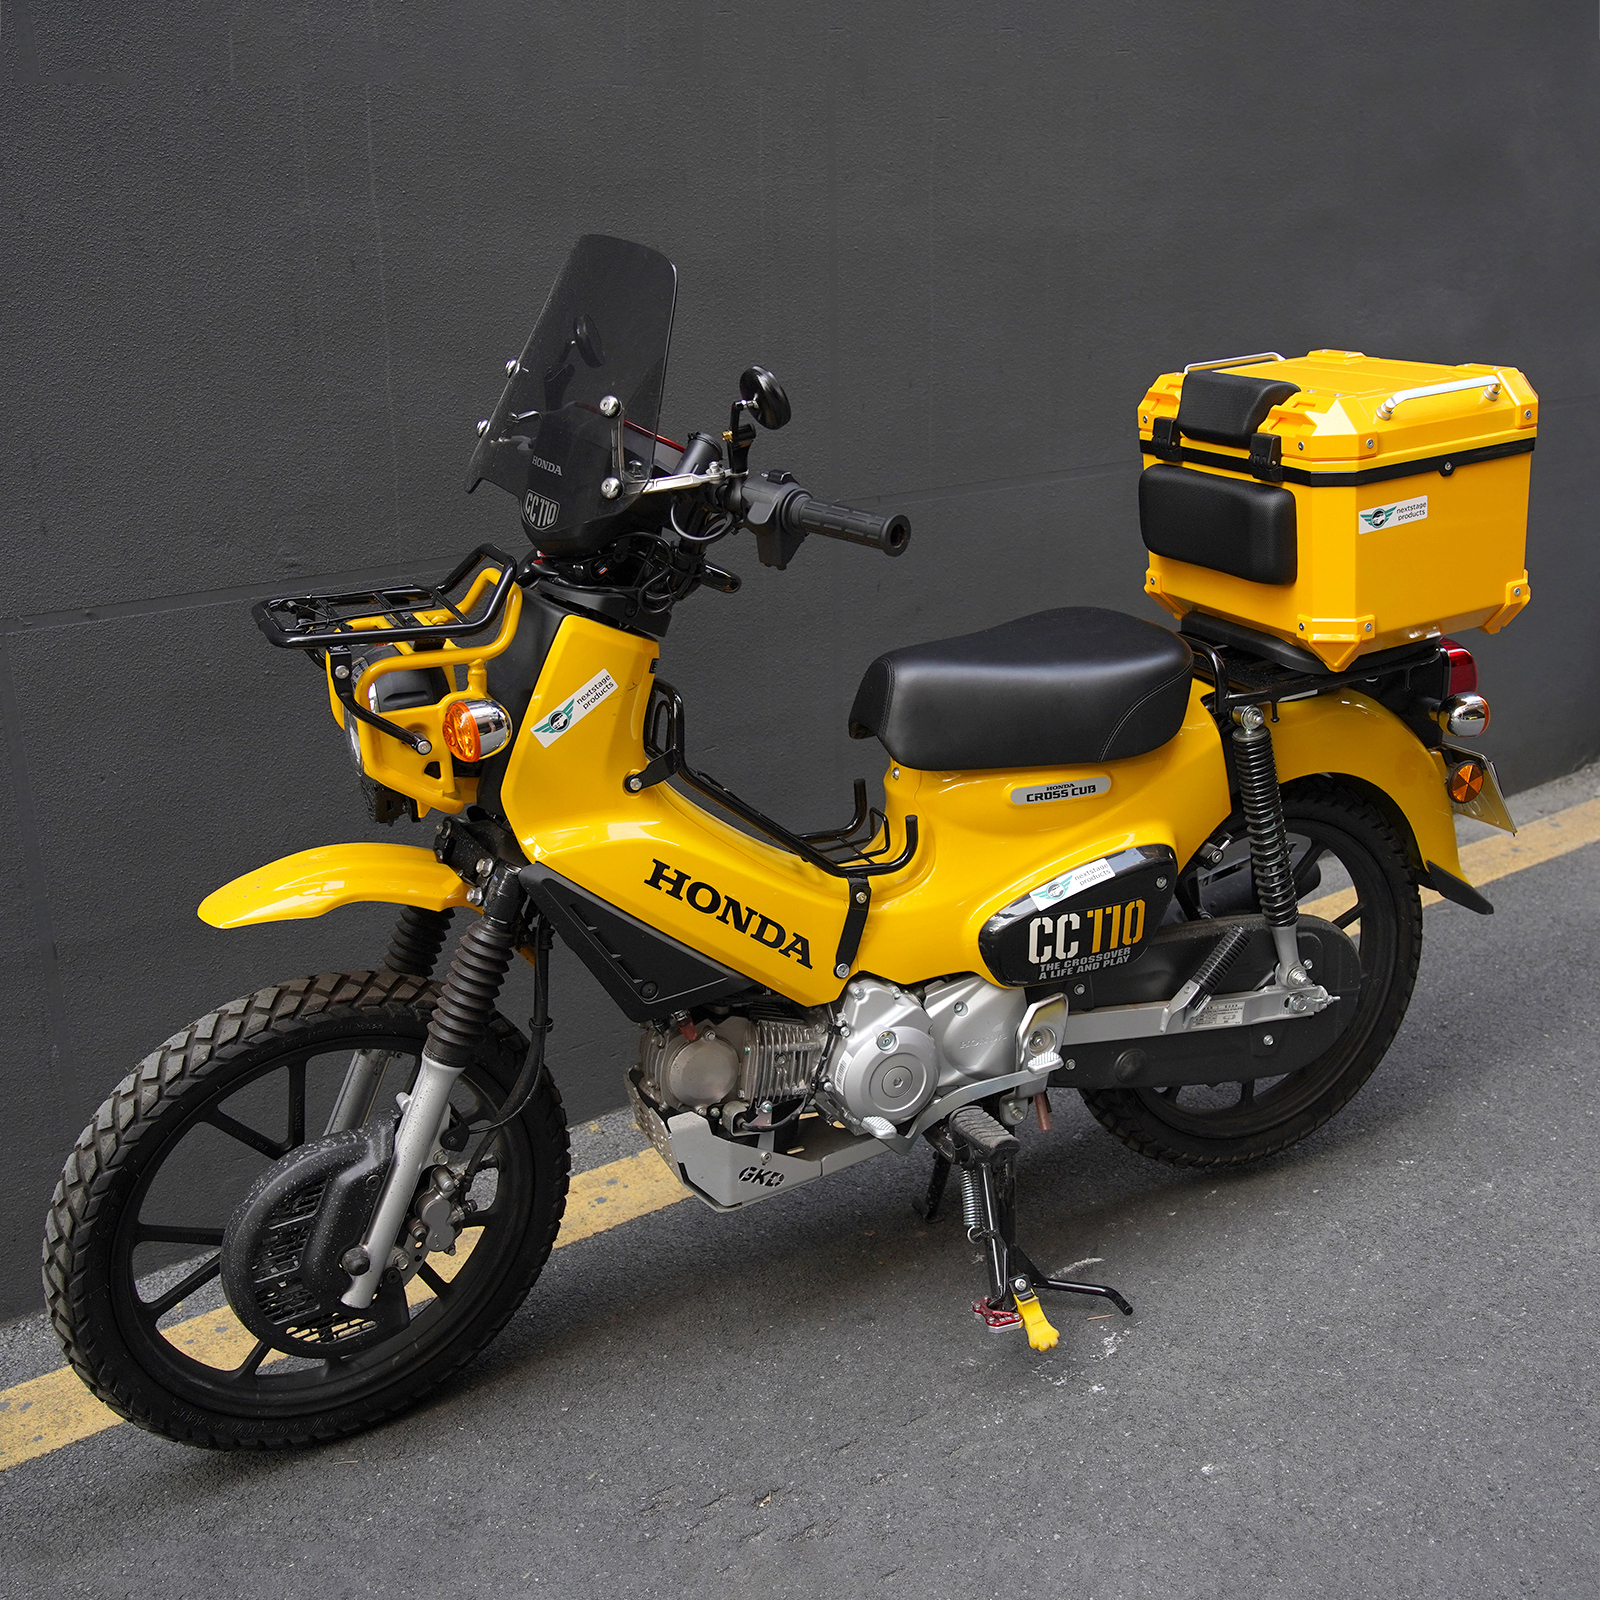 45L 大容量 リアボックス バイク用 スーパーカブ クロスカブ 7色 防水 耐衝撃 トップケース リアケース バイクキャリー 着脱可能 鍵付 汎用